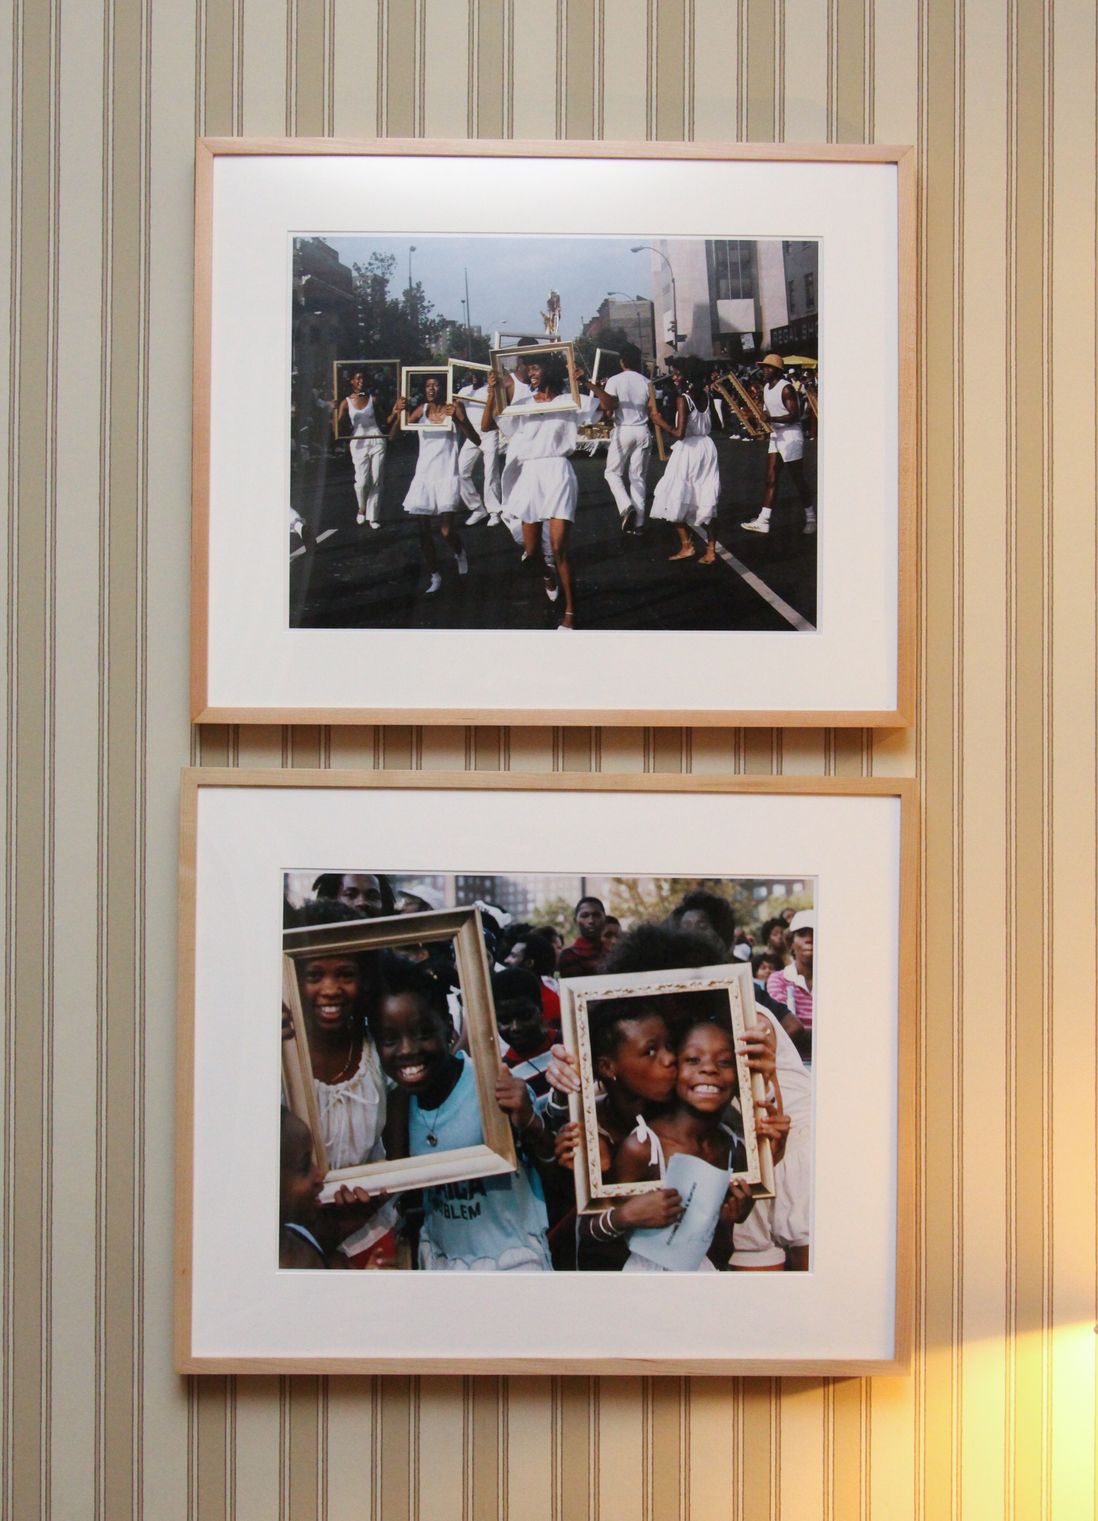 Photographs by Lorraine O'Grady (NYC Mayor's Office)